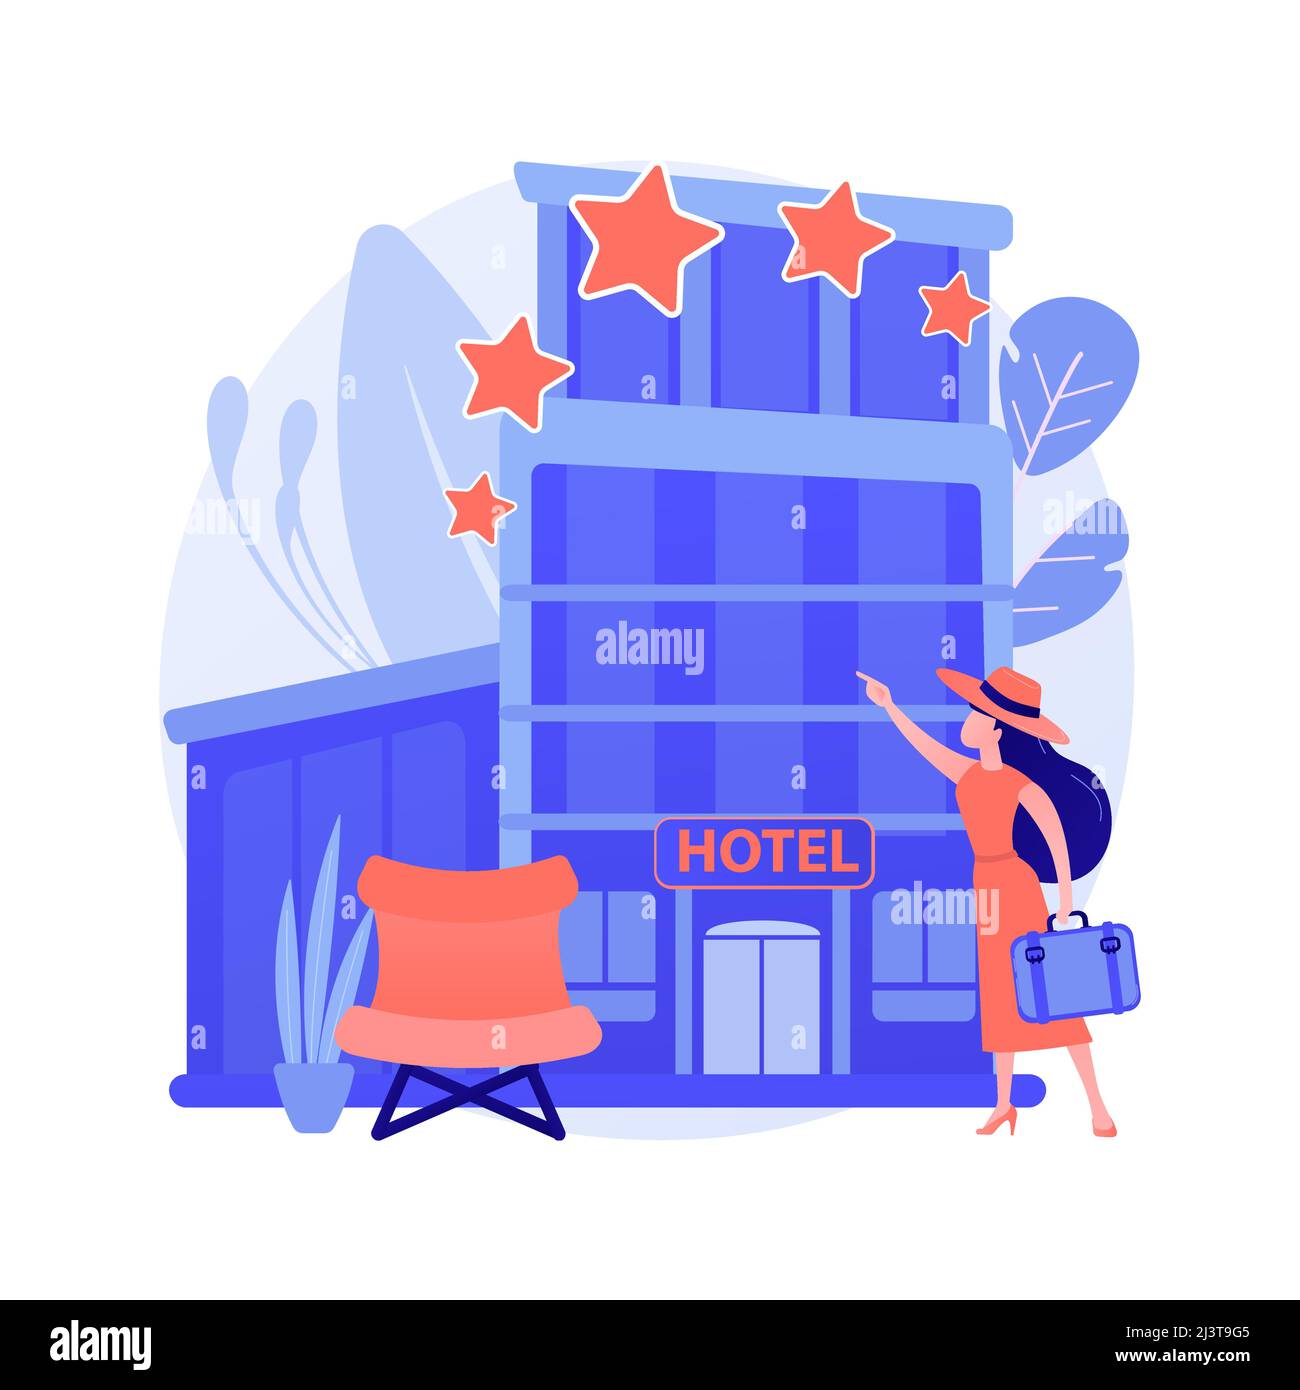 Cartoon Network Hotel Wallpaper, I'd like to say that I dre…